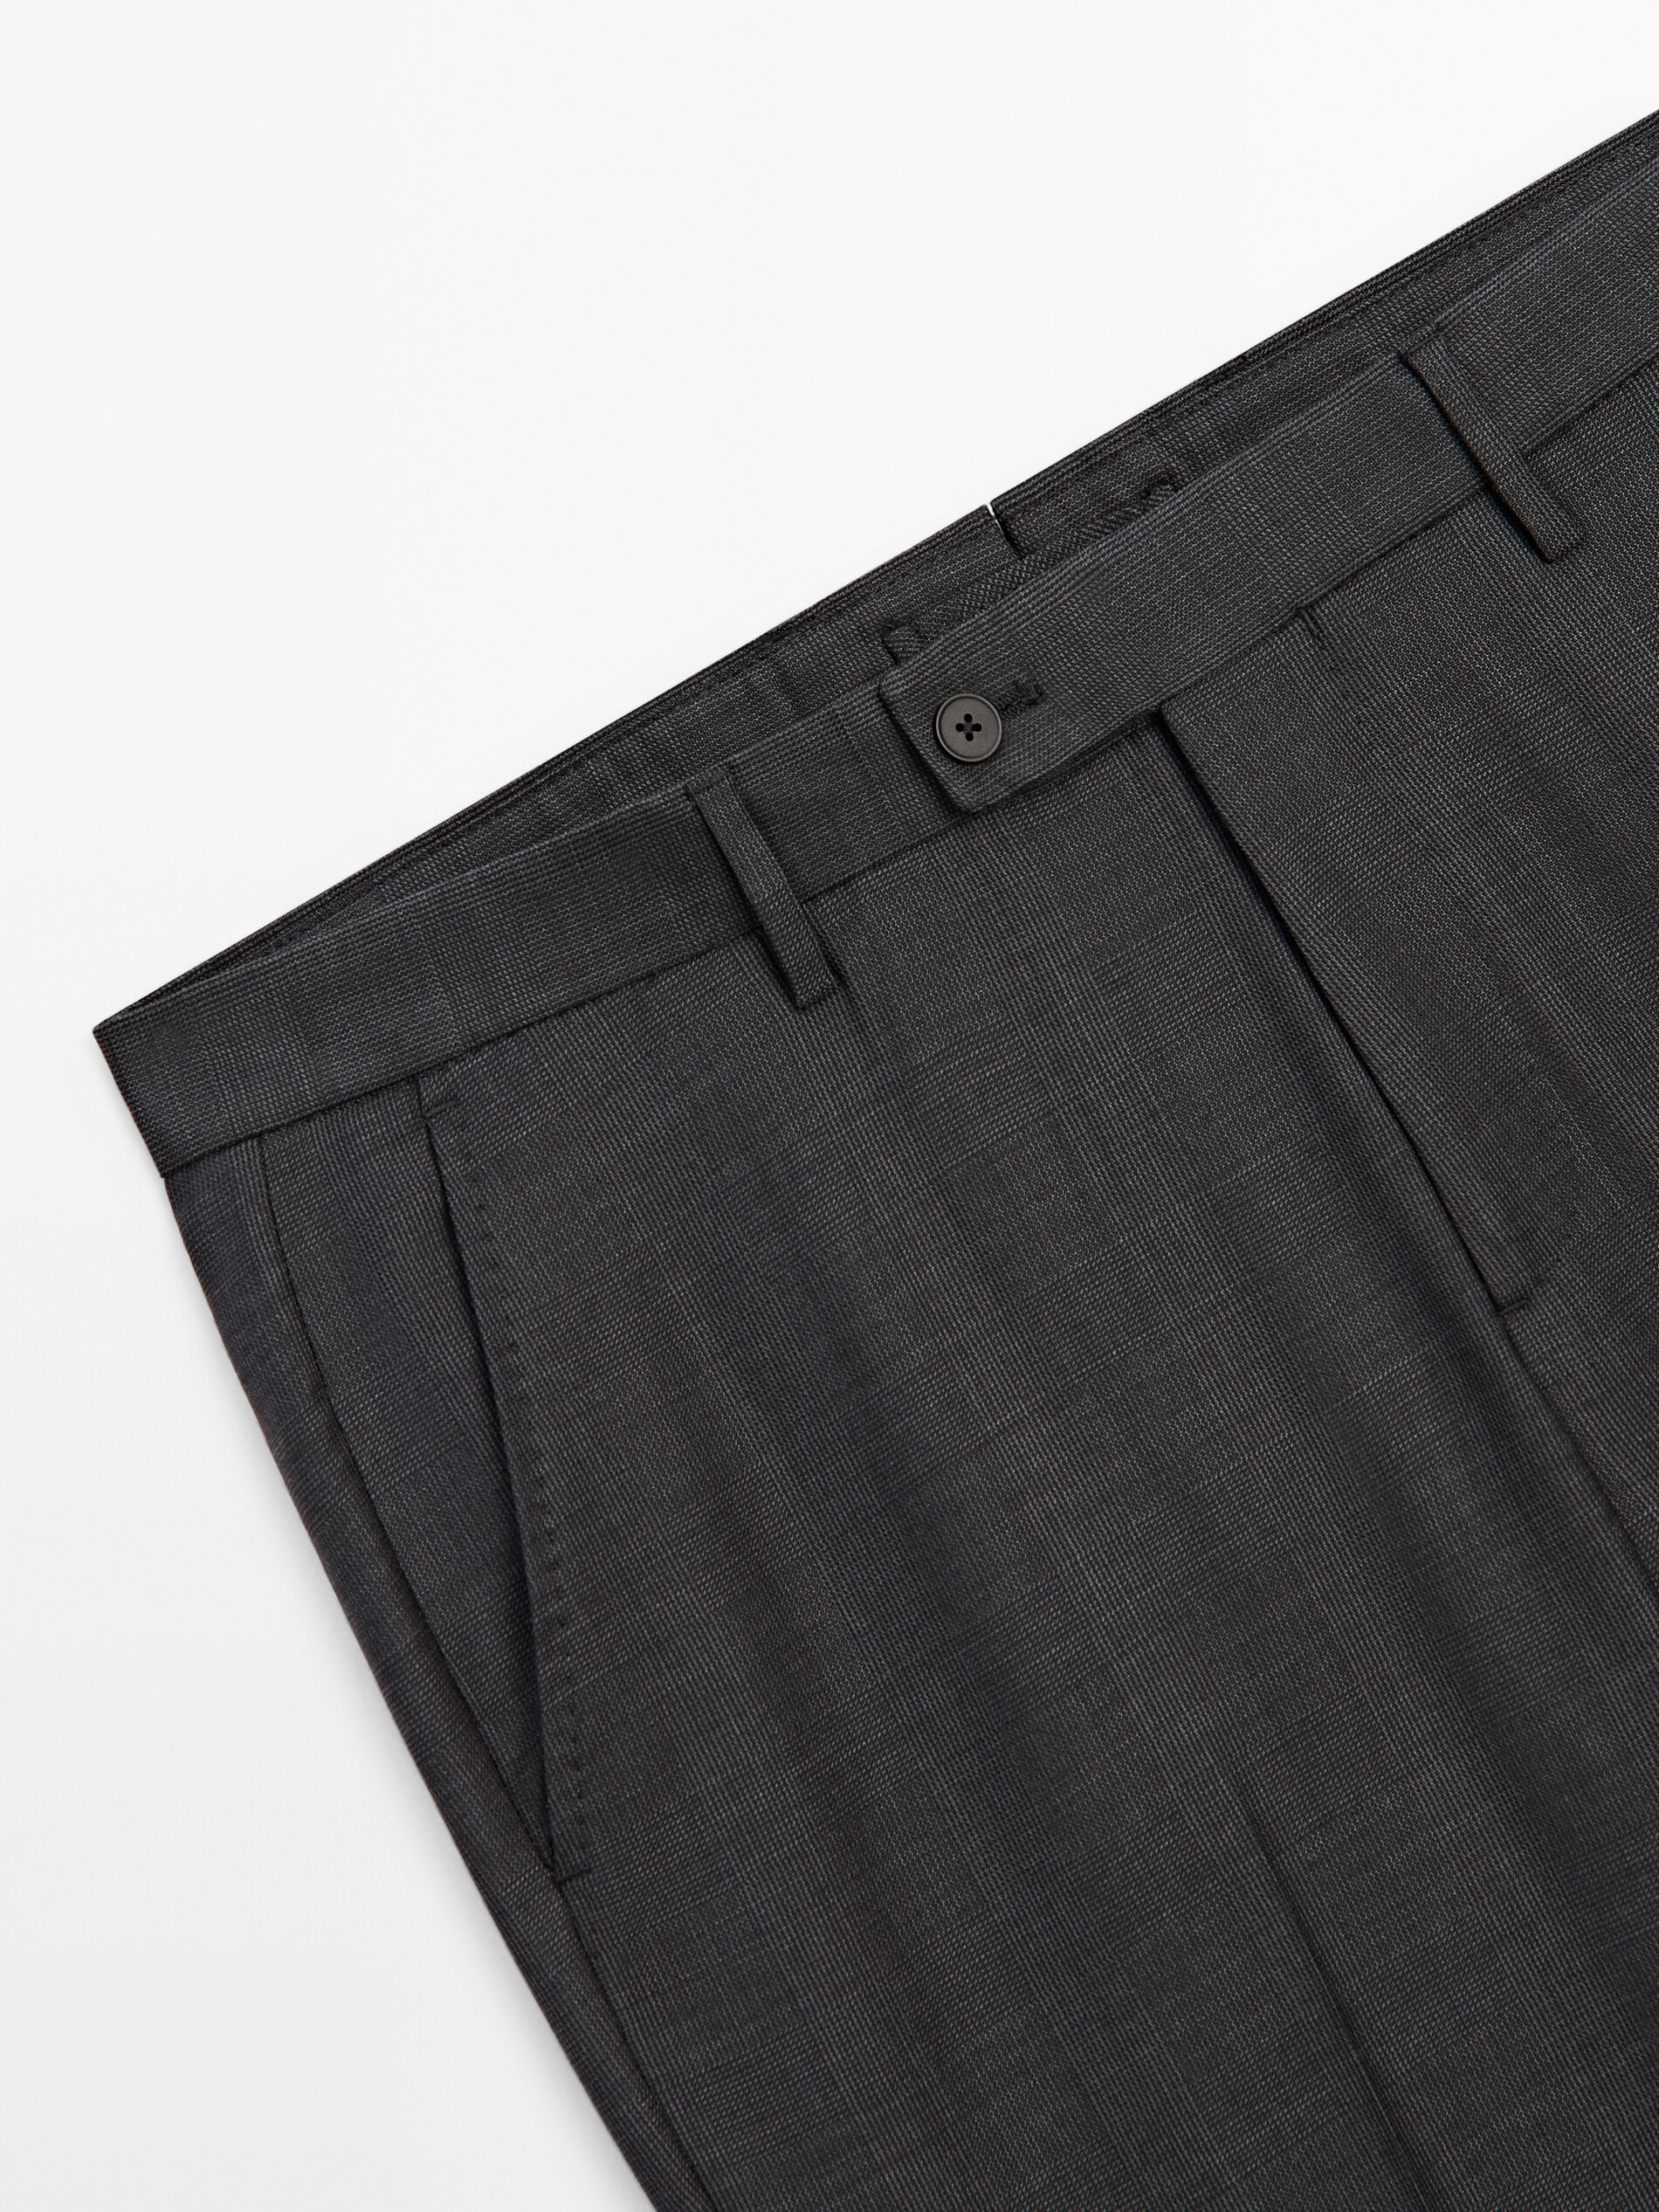 Pantalón traje gris cuadros 100% lana